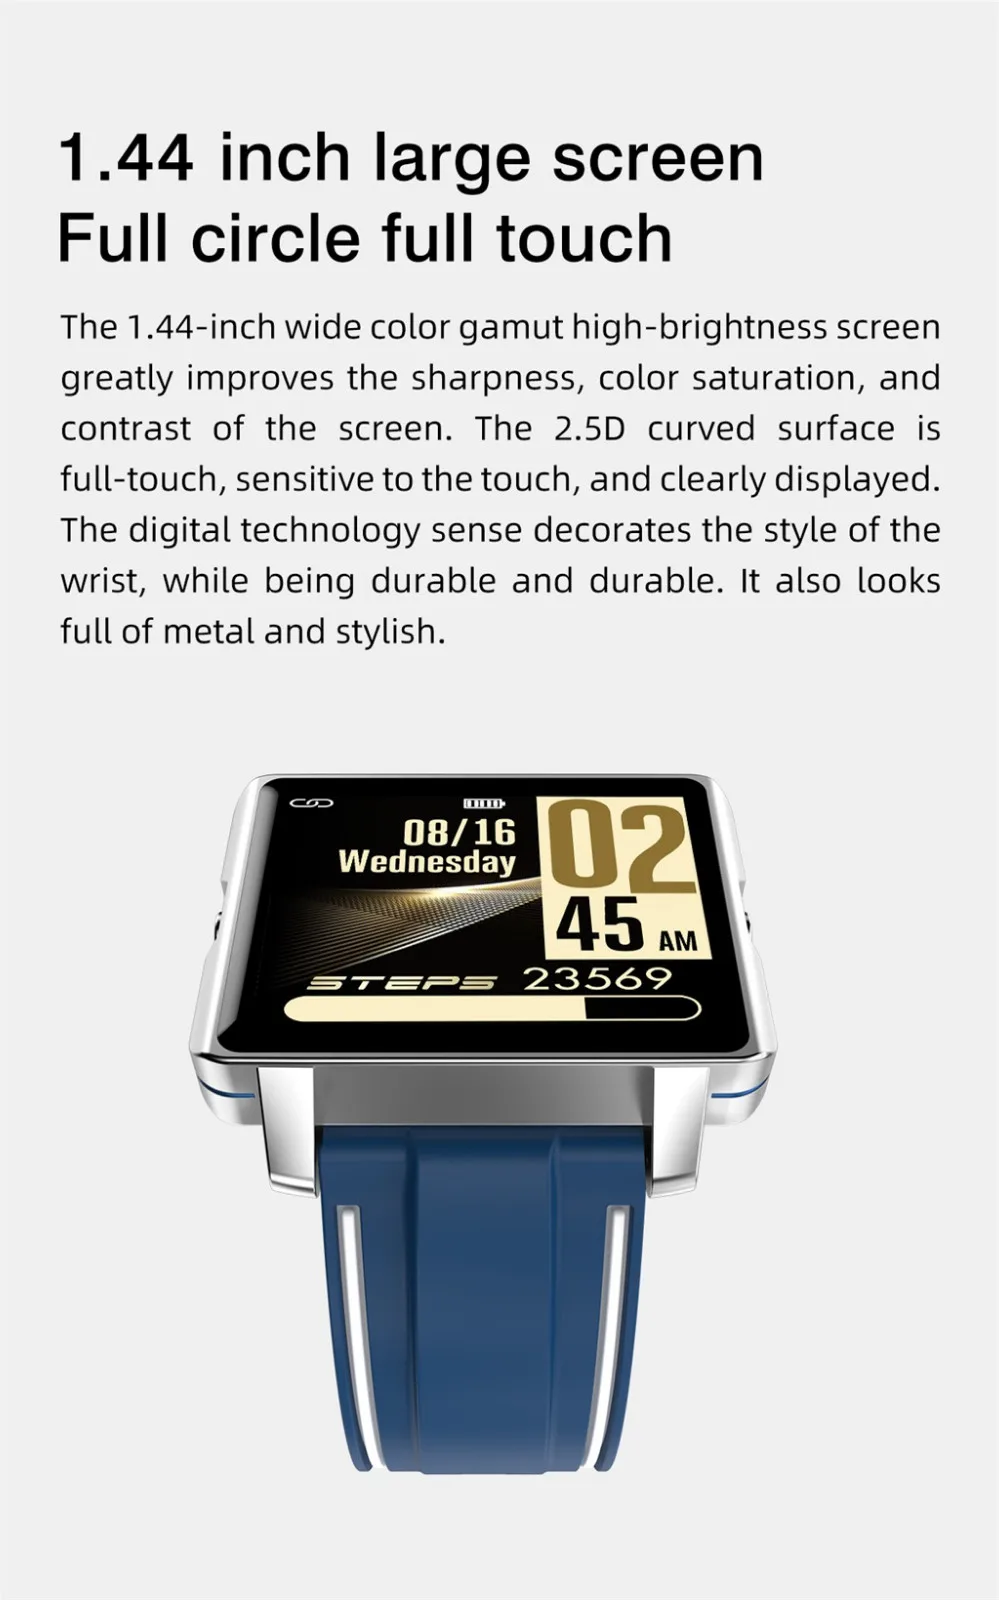 L5 1.44 palca velik zaslon multi-funkcijo smart watch luksuzni poslovni IP68 vodotesen šport Bluetooth Smartwatch fitnes E